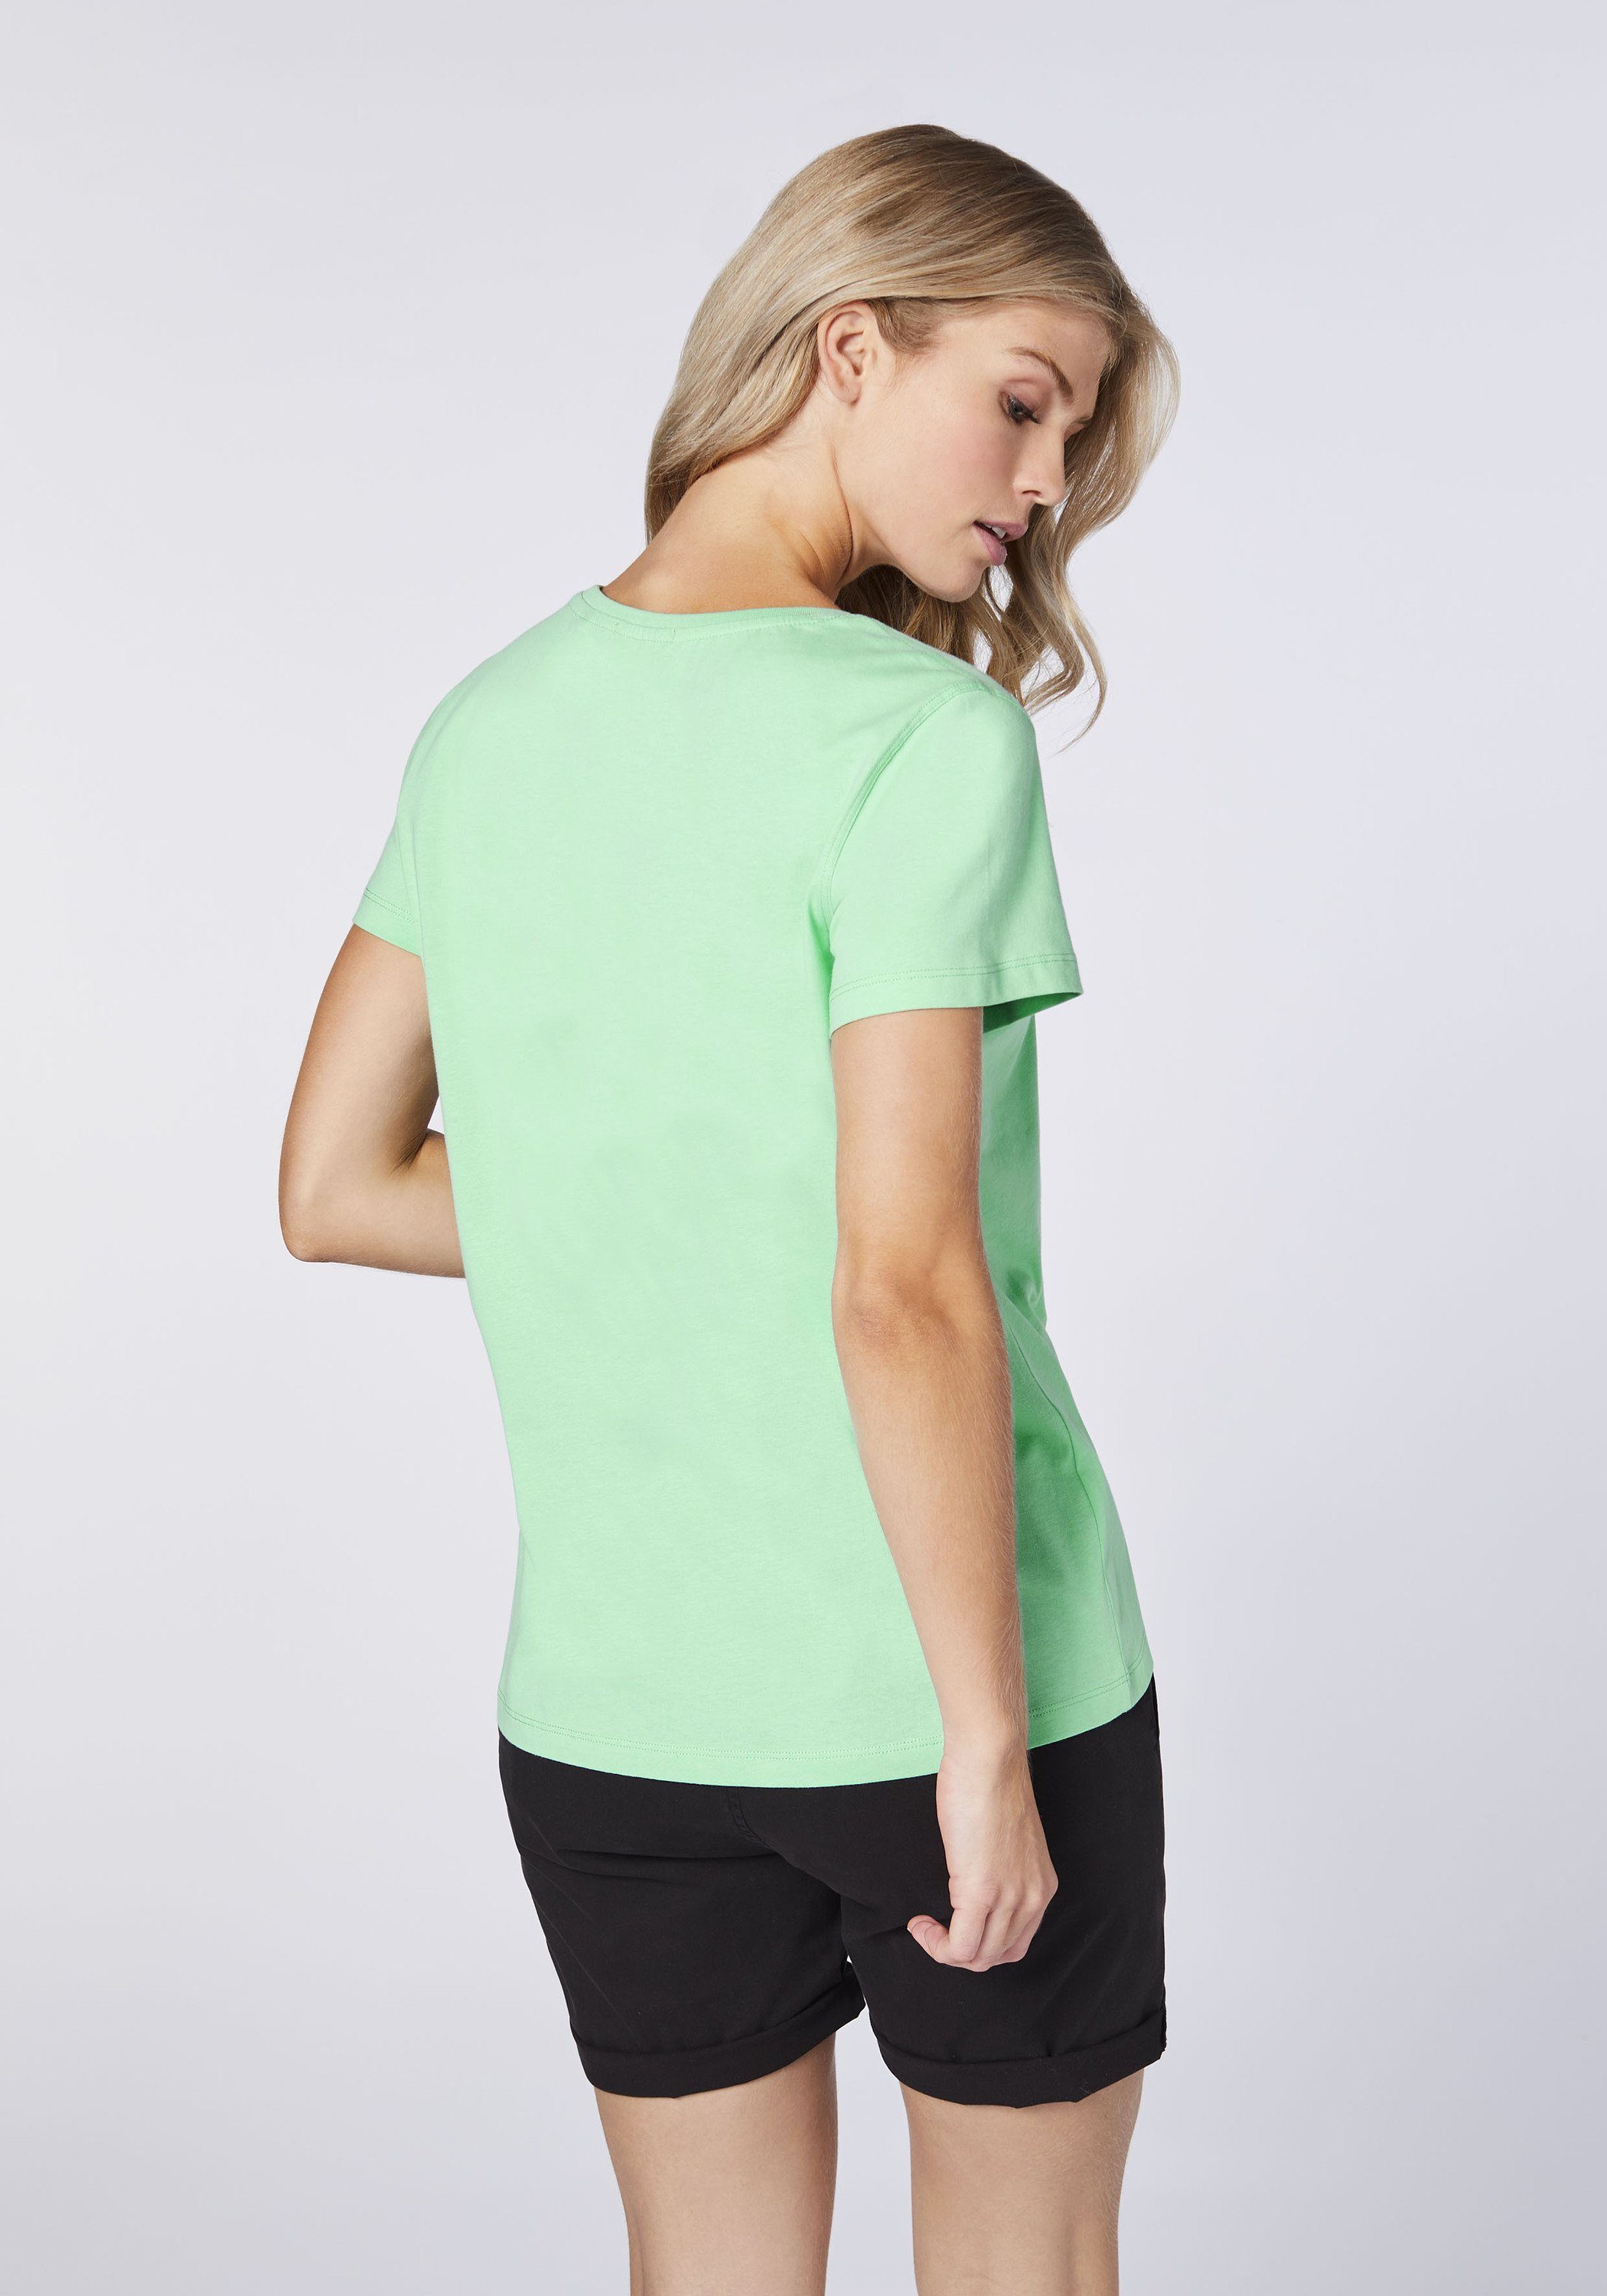 T-Shirt Frontprint Green Neptune Print-Shirt Chiemsee 1 farbenfrohem mit